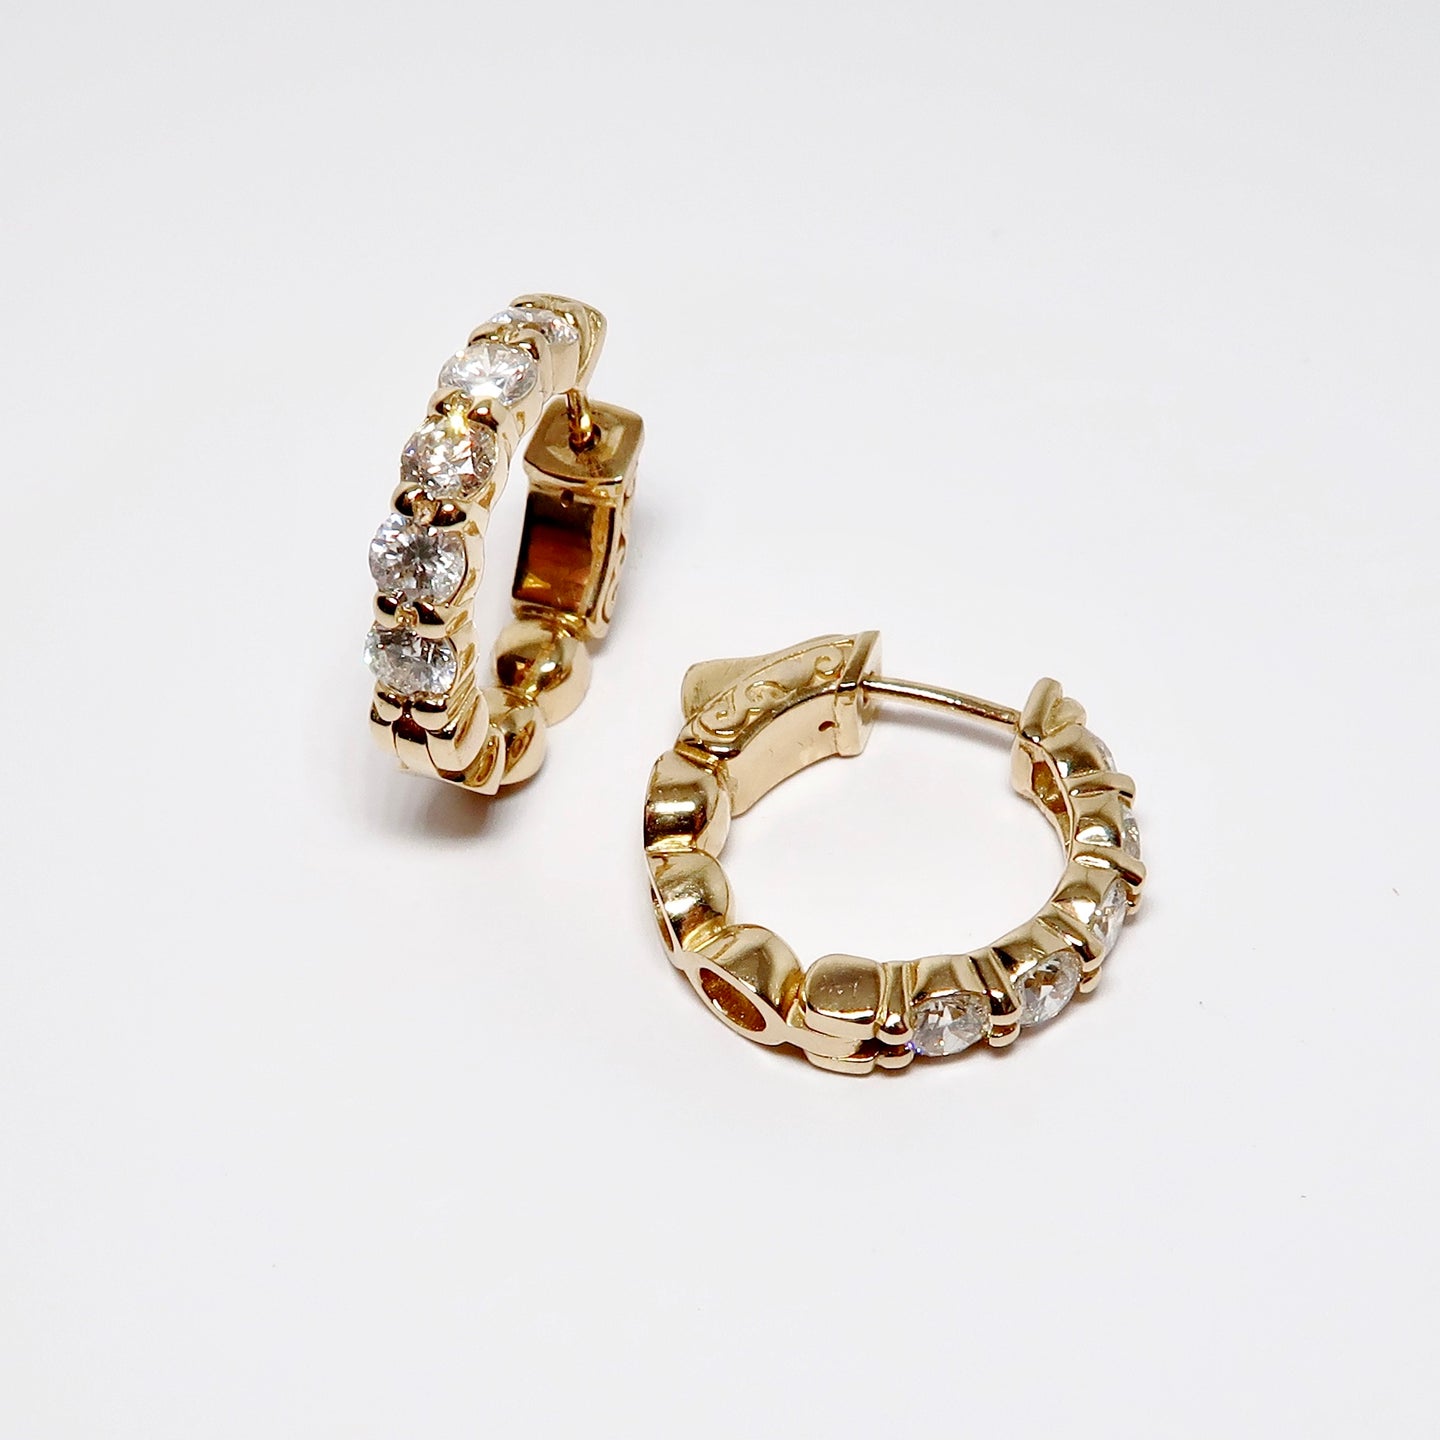 14k Yellow Gold Diamond Huggie Earrings (Available in White Gold and Yellow Gold and 1ctw and 2ctw Diamond)